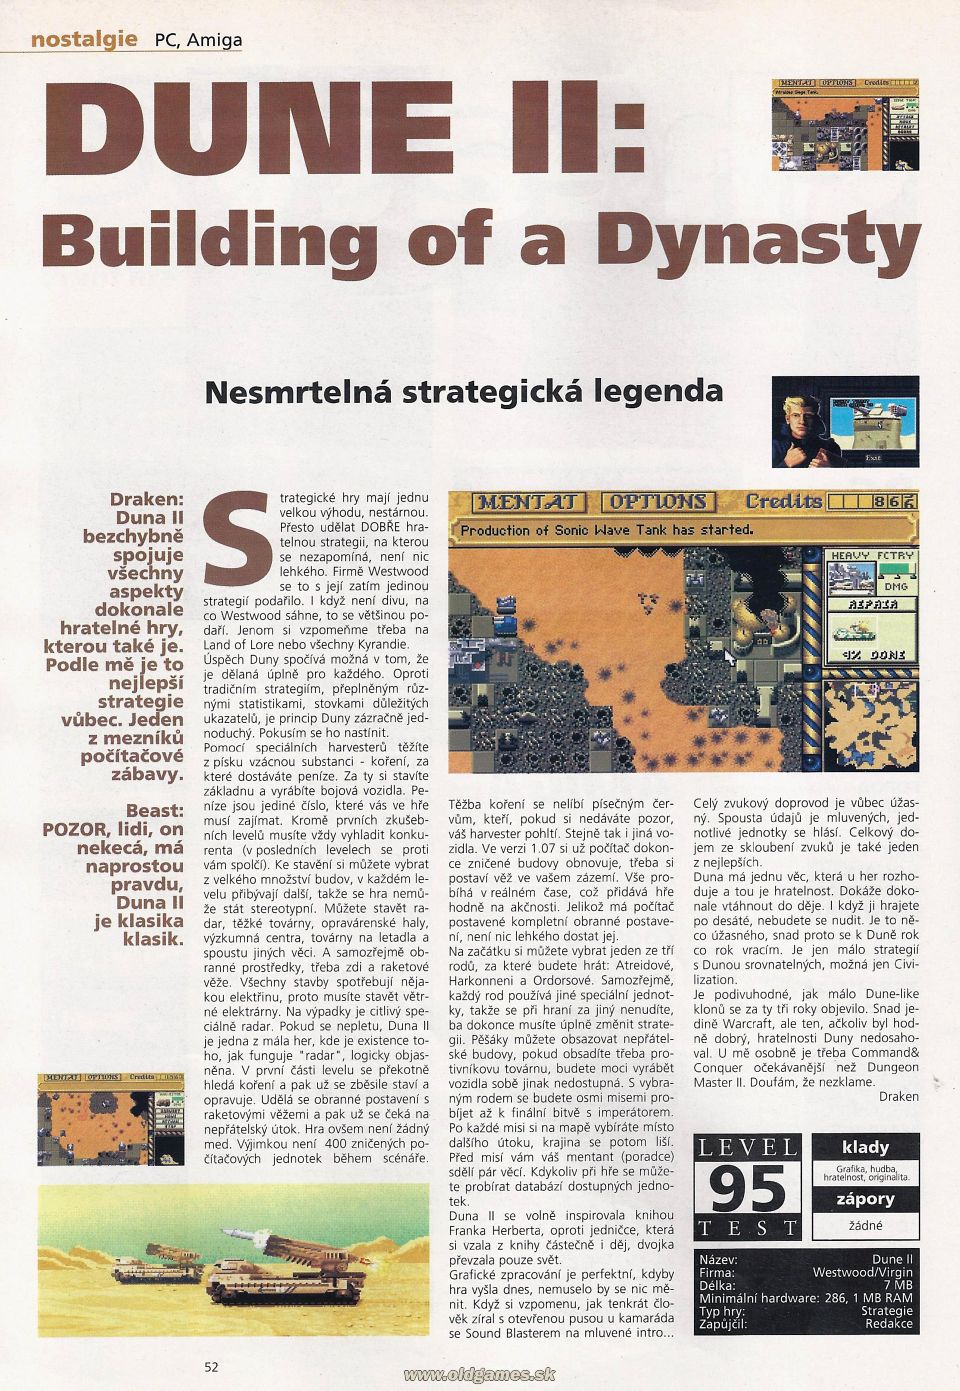 Nostalgie: Dune II: Building of a Dynasty